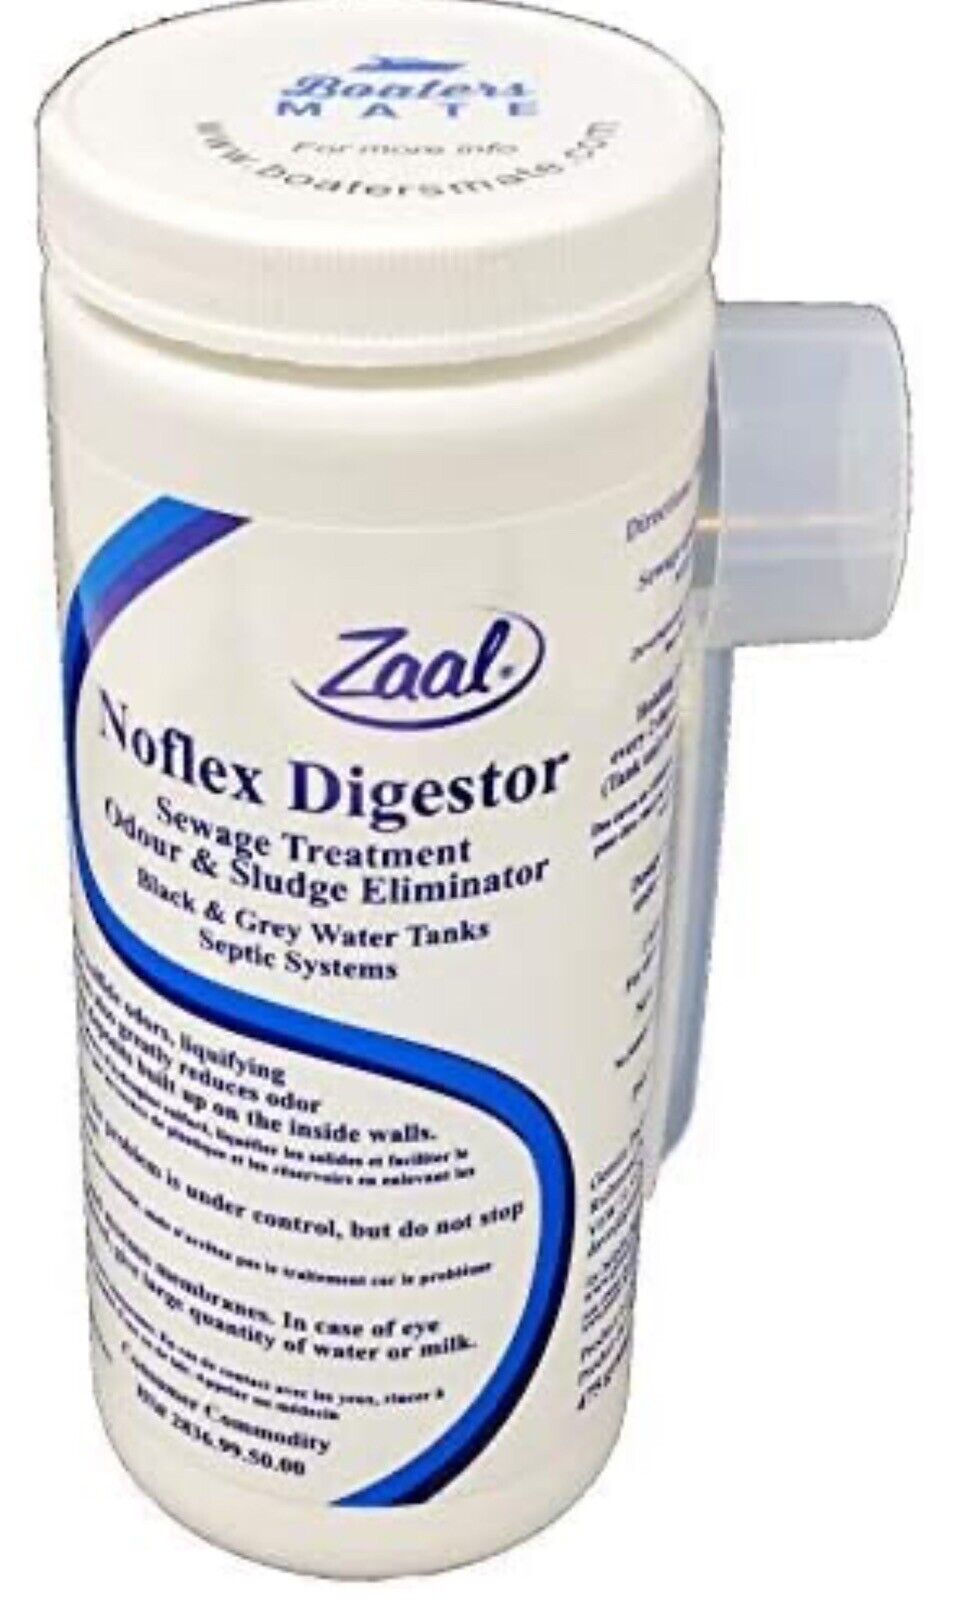 Zaal Noflex Digestor